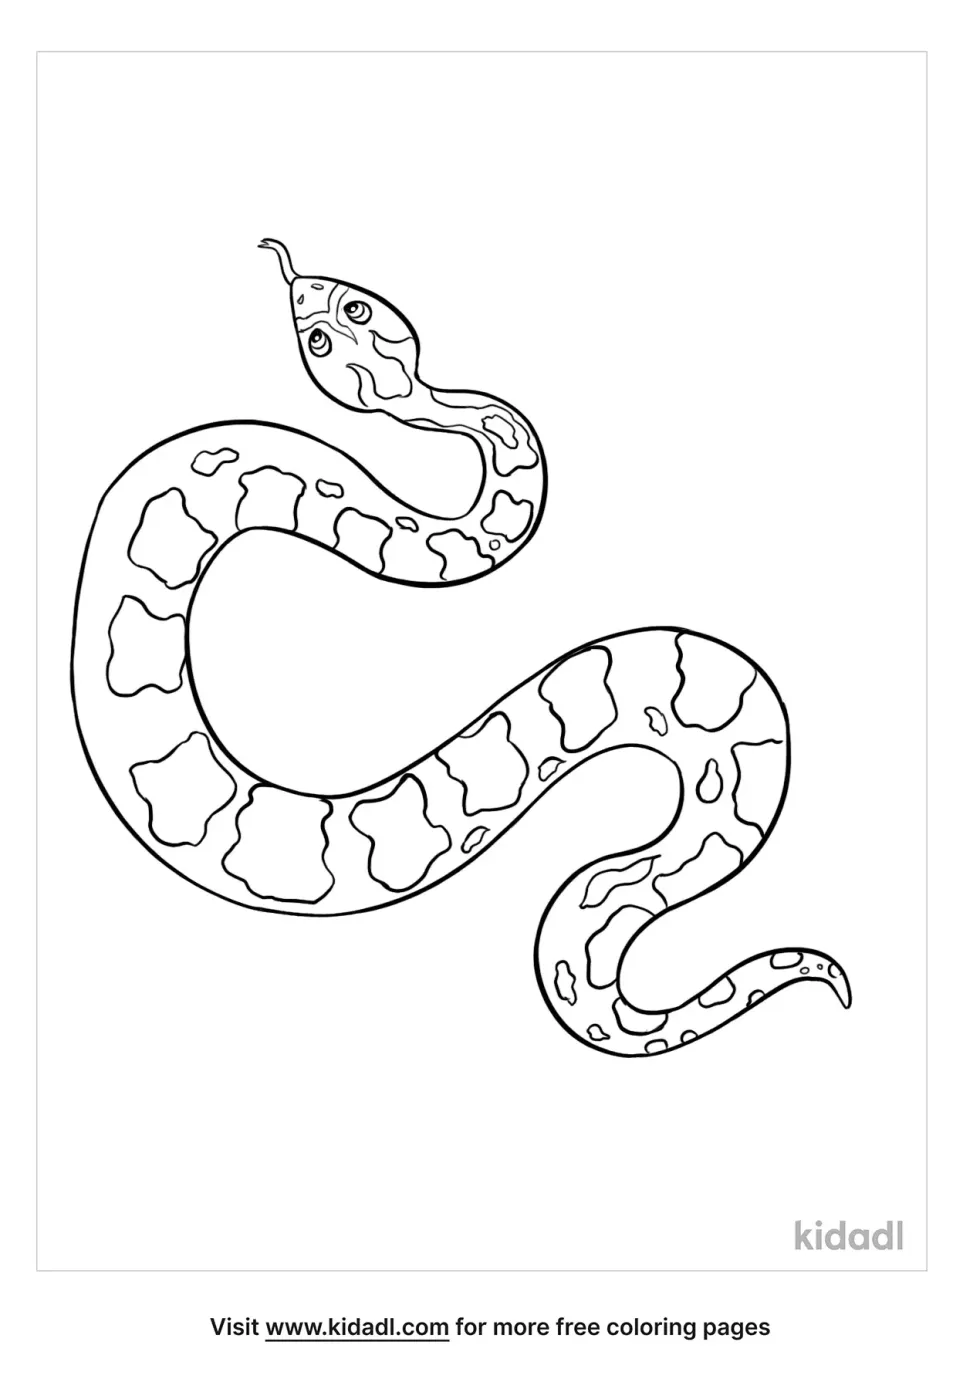 Albino Corn Snake Coloring Page